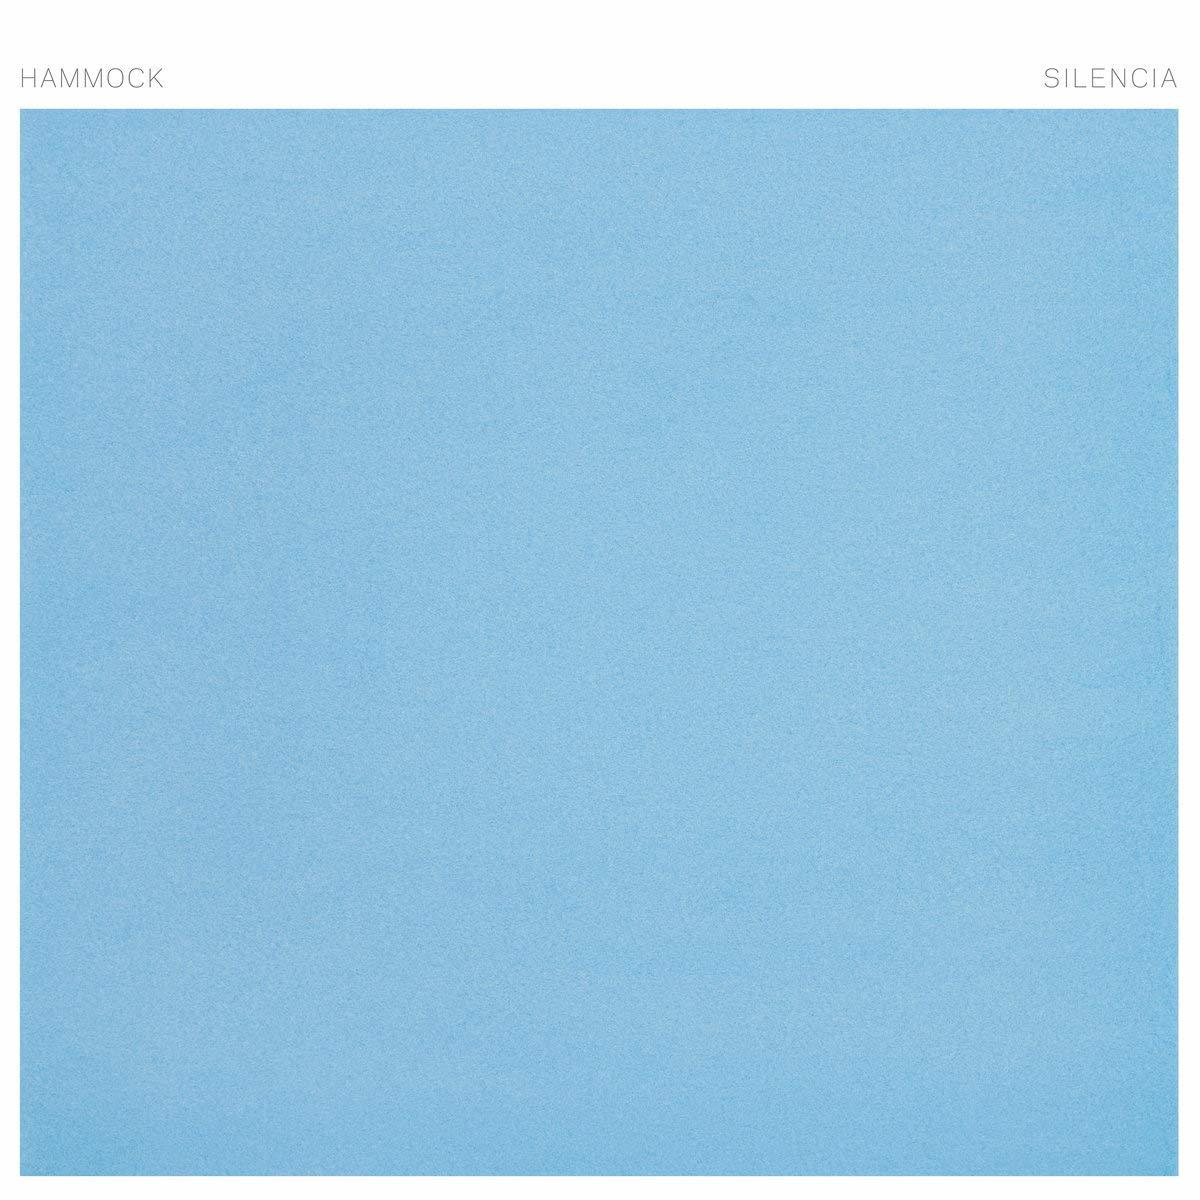 Hammock - Silencia (CD) 